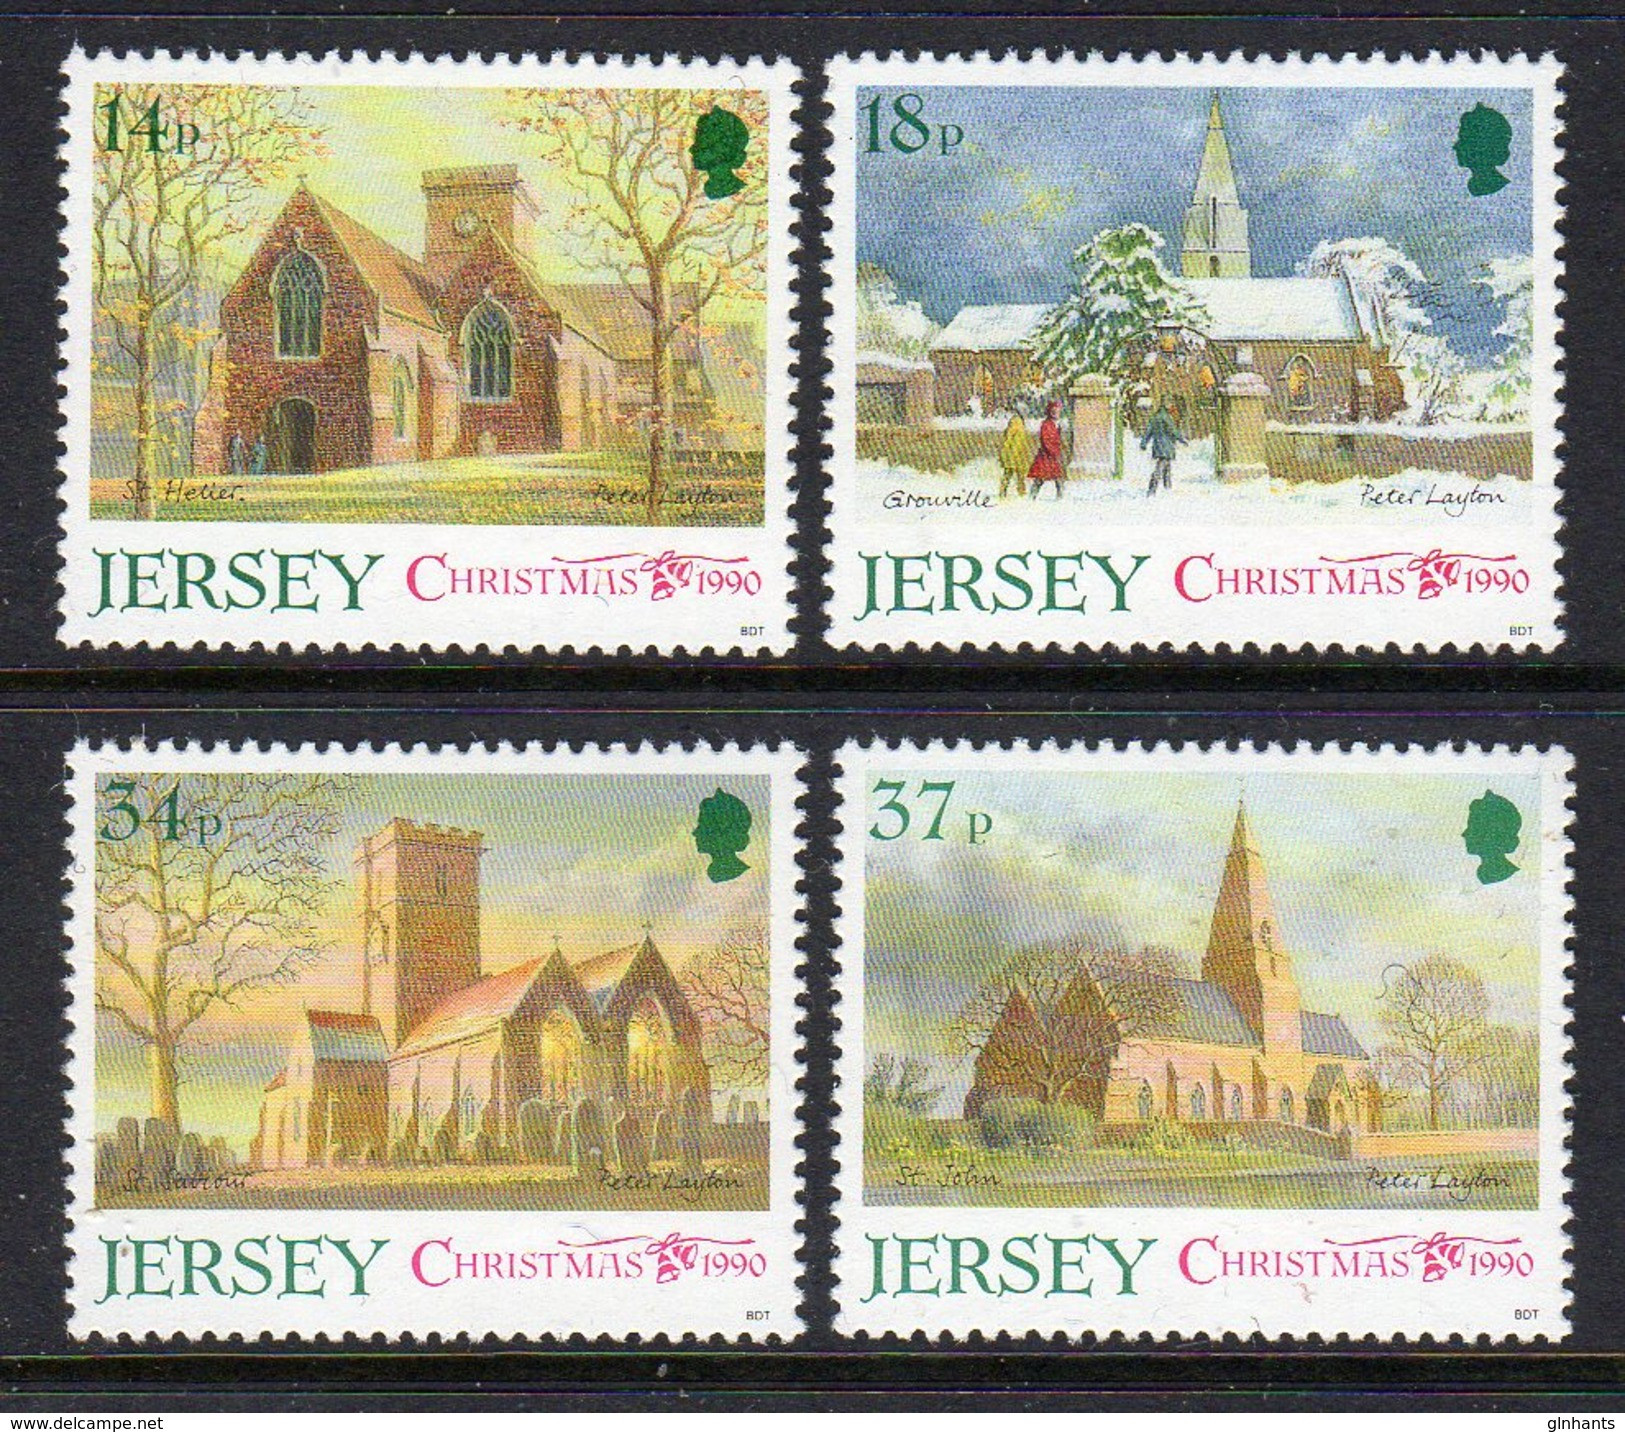 GB JERSEY - 1990 CHRISTMAS CHURCHES SET (4V) SG 535-538 FINE MNH ** - Jersey